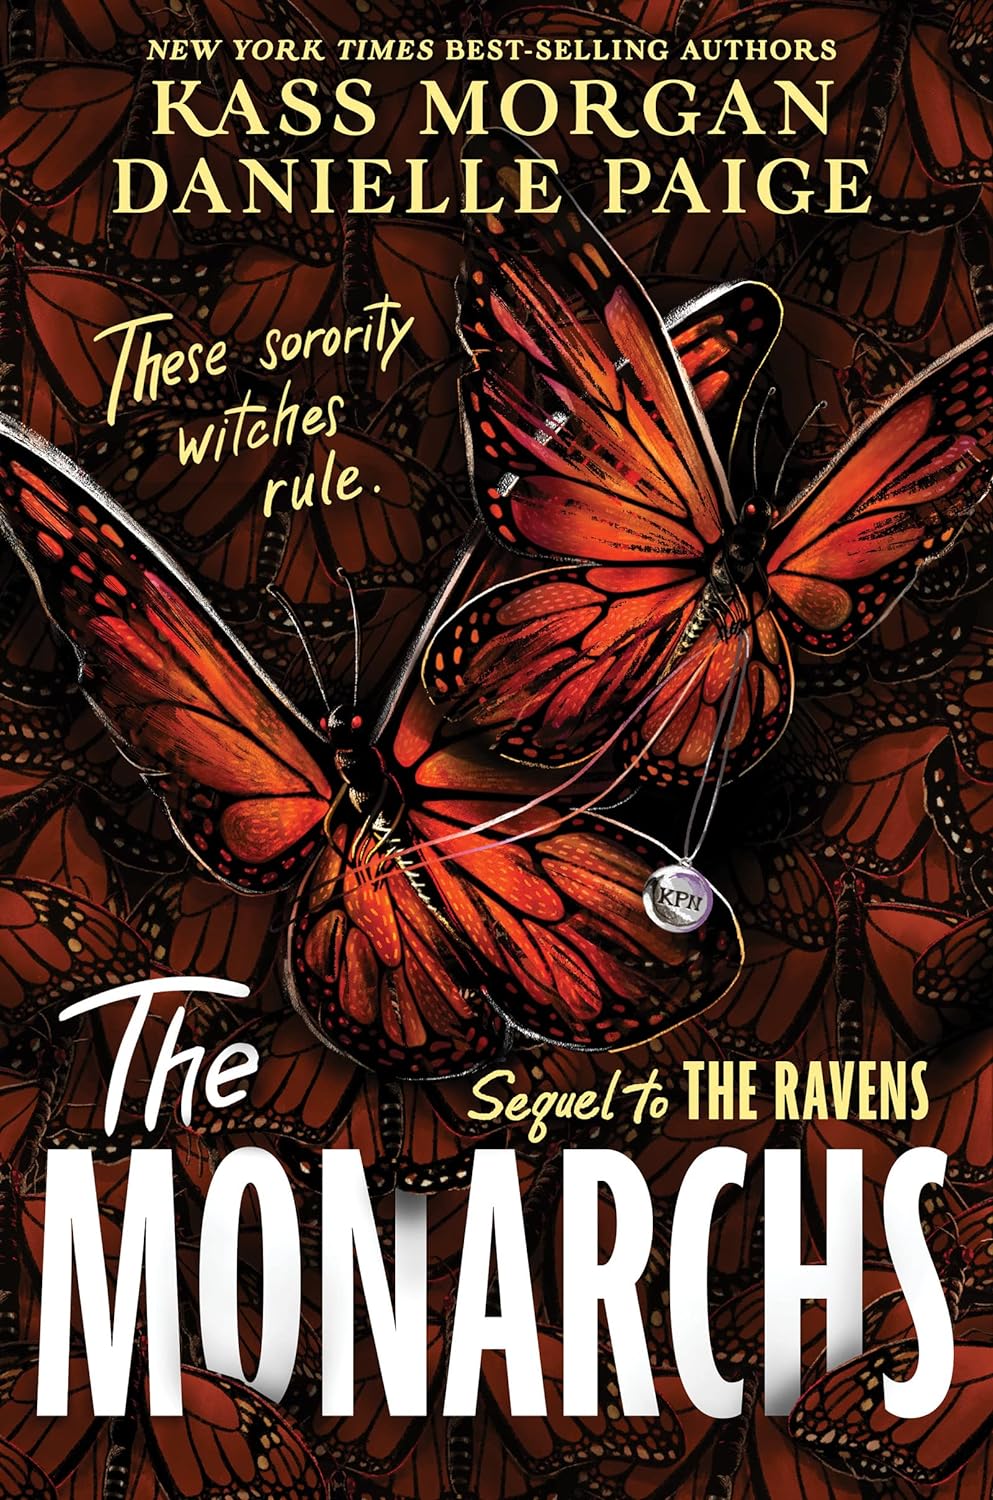 The Monarchs (The Ravens, Bk. 2)